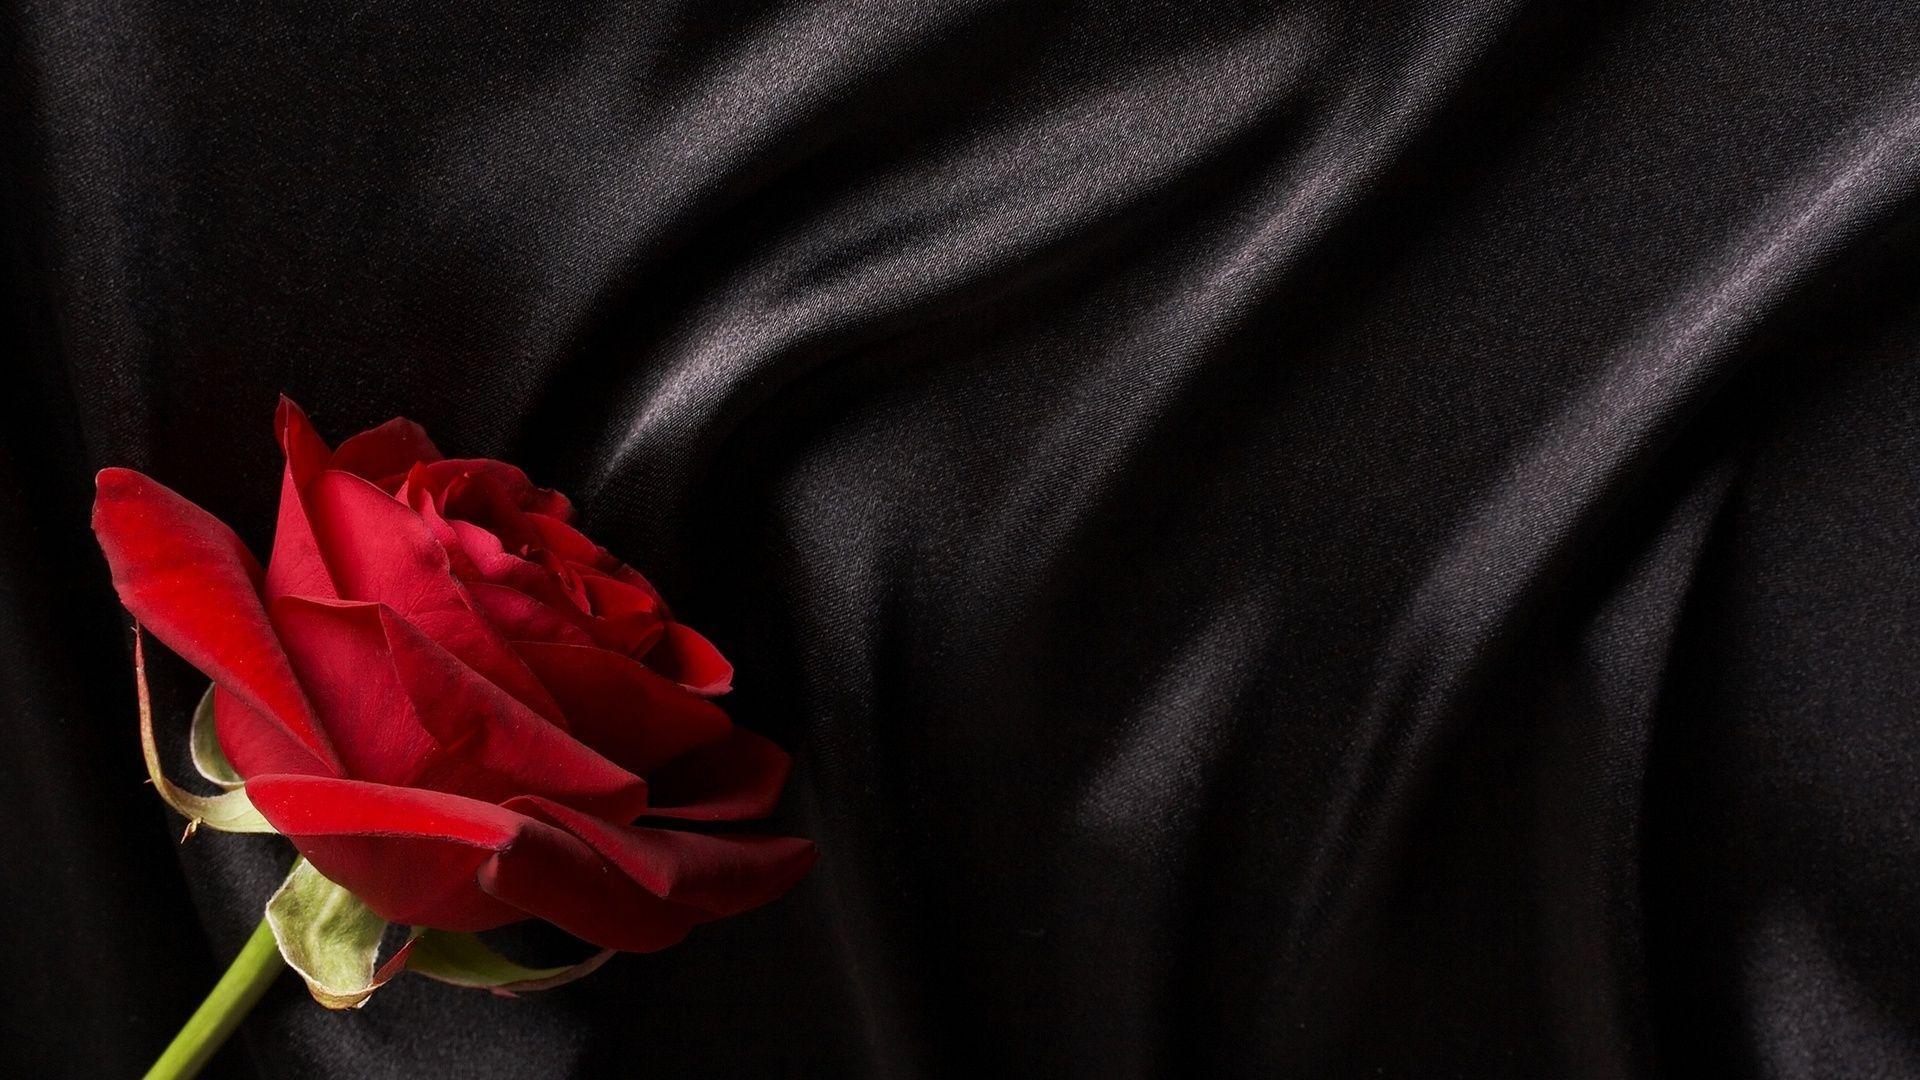 dongetrabi: Black And Red Roses Wallpaper Image